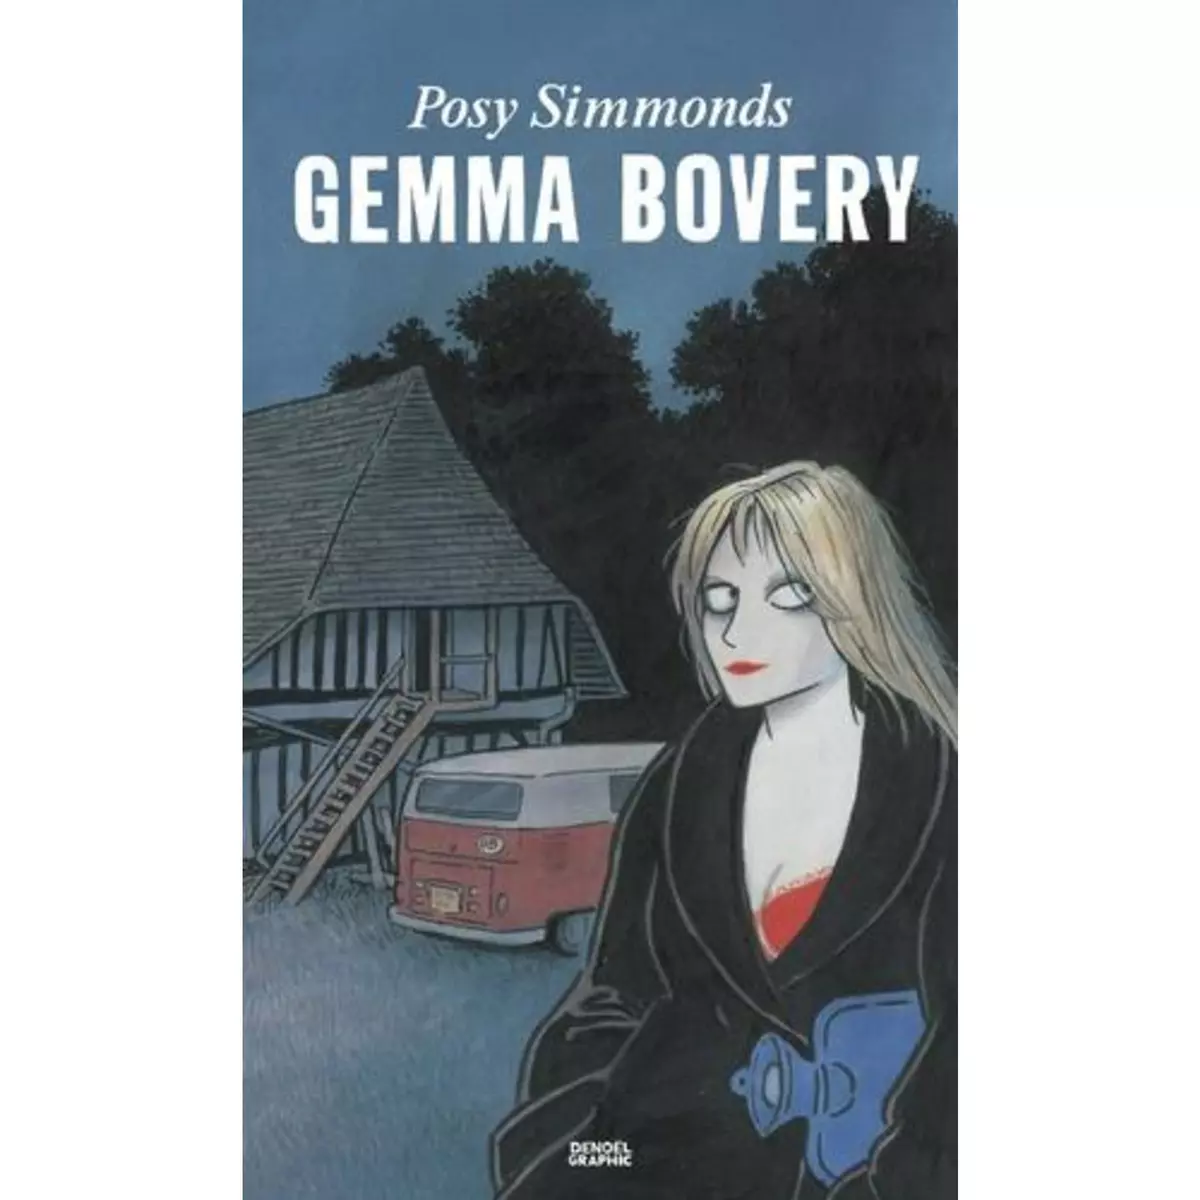  GEMMA BOVERY, Simmonds Posy